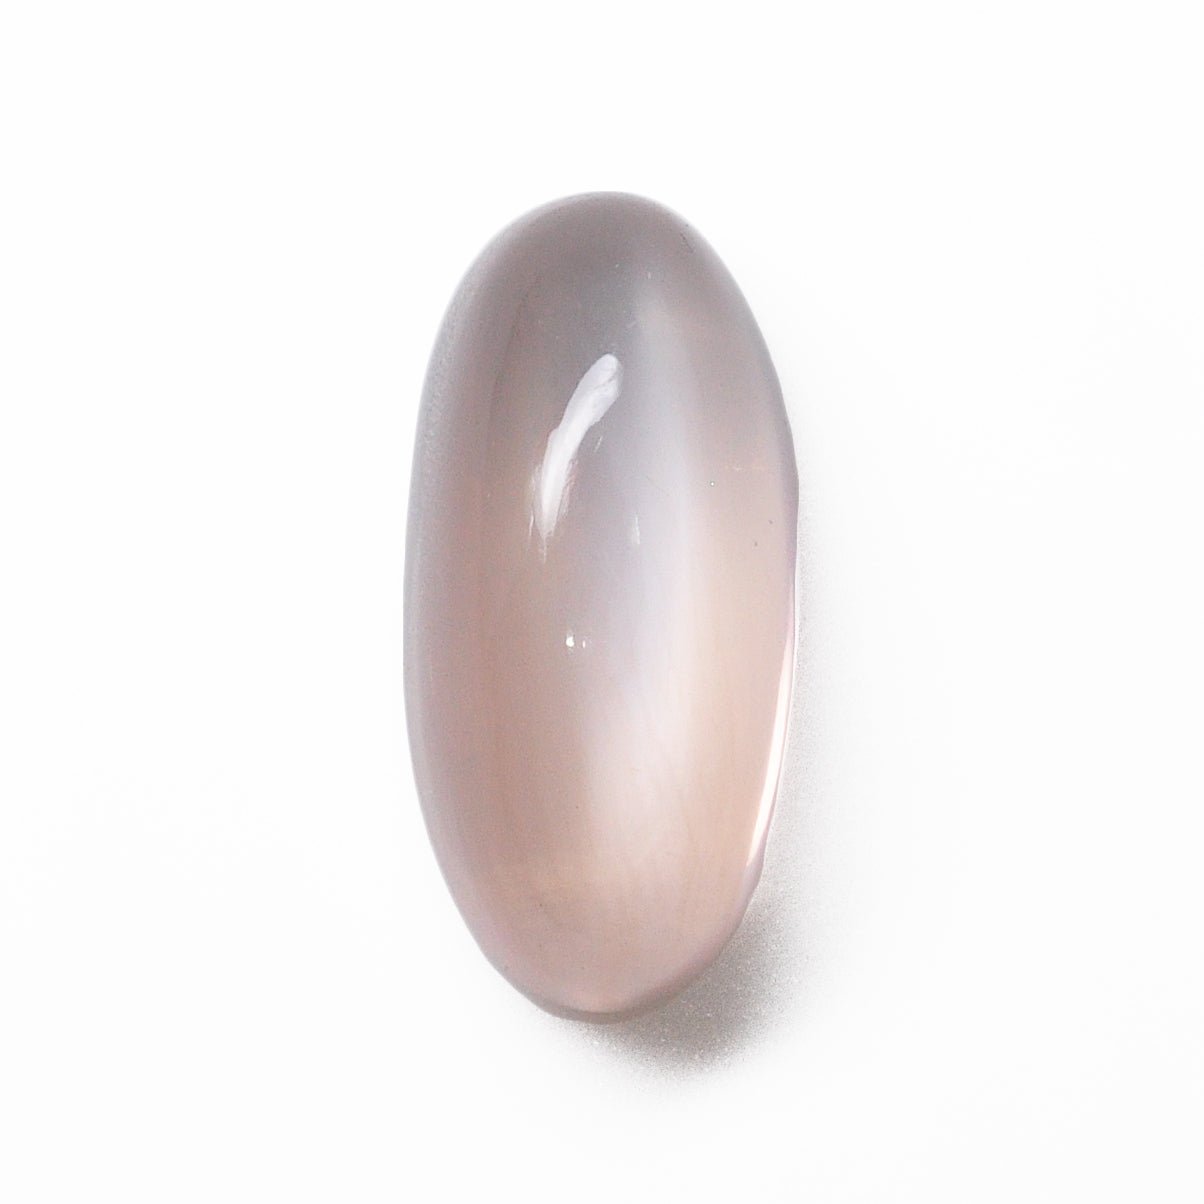 Pale Pink Catseye Moonstone 18.59 mm 9.25 carats Polished Oval Cabochon - 8-009 - Crystalarium